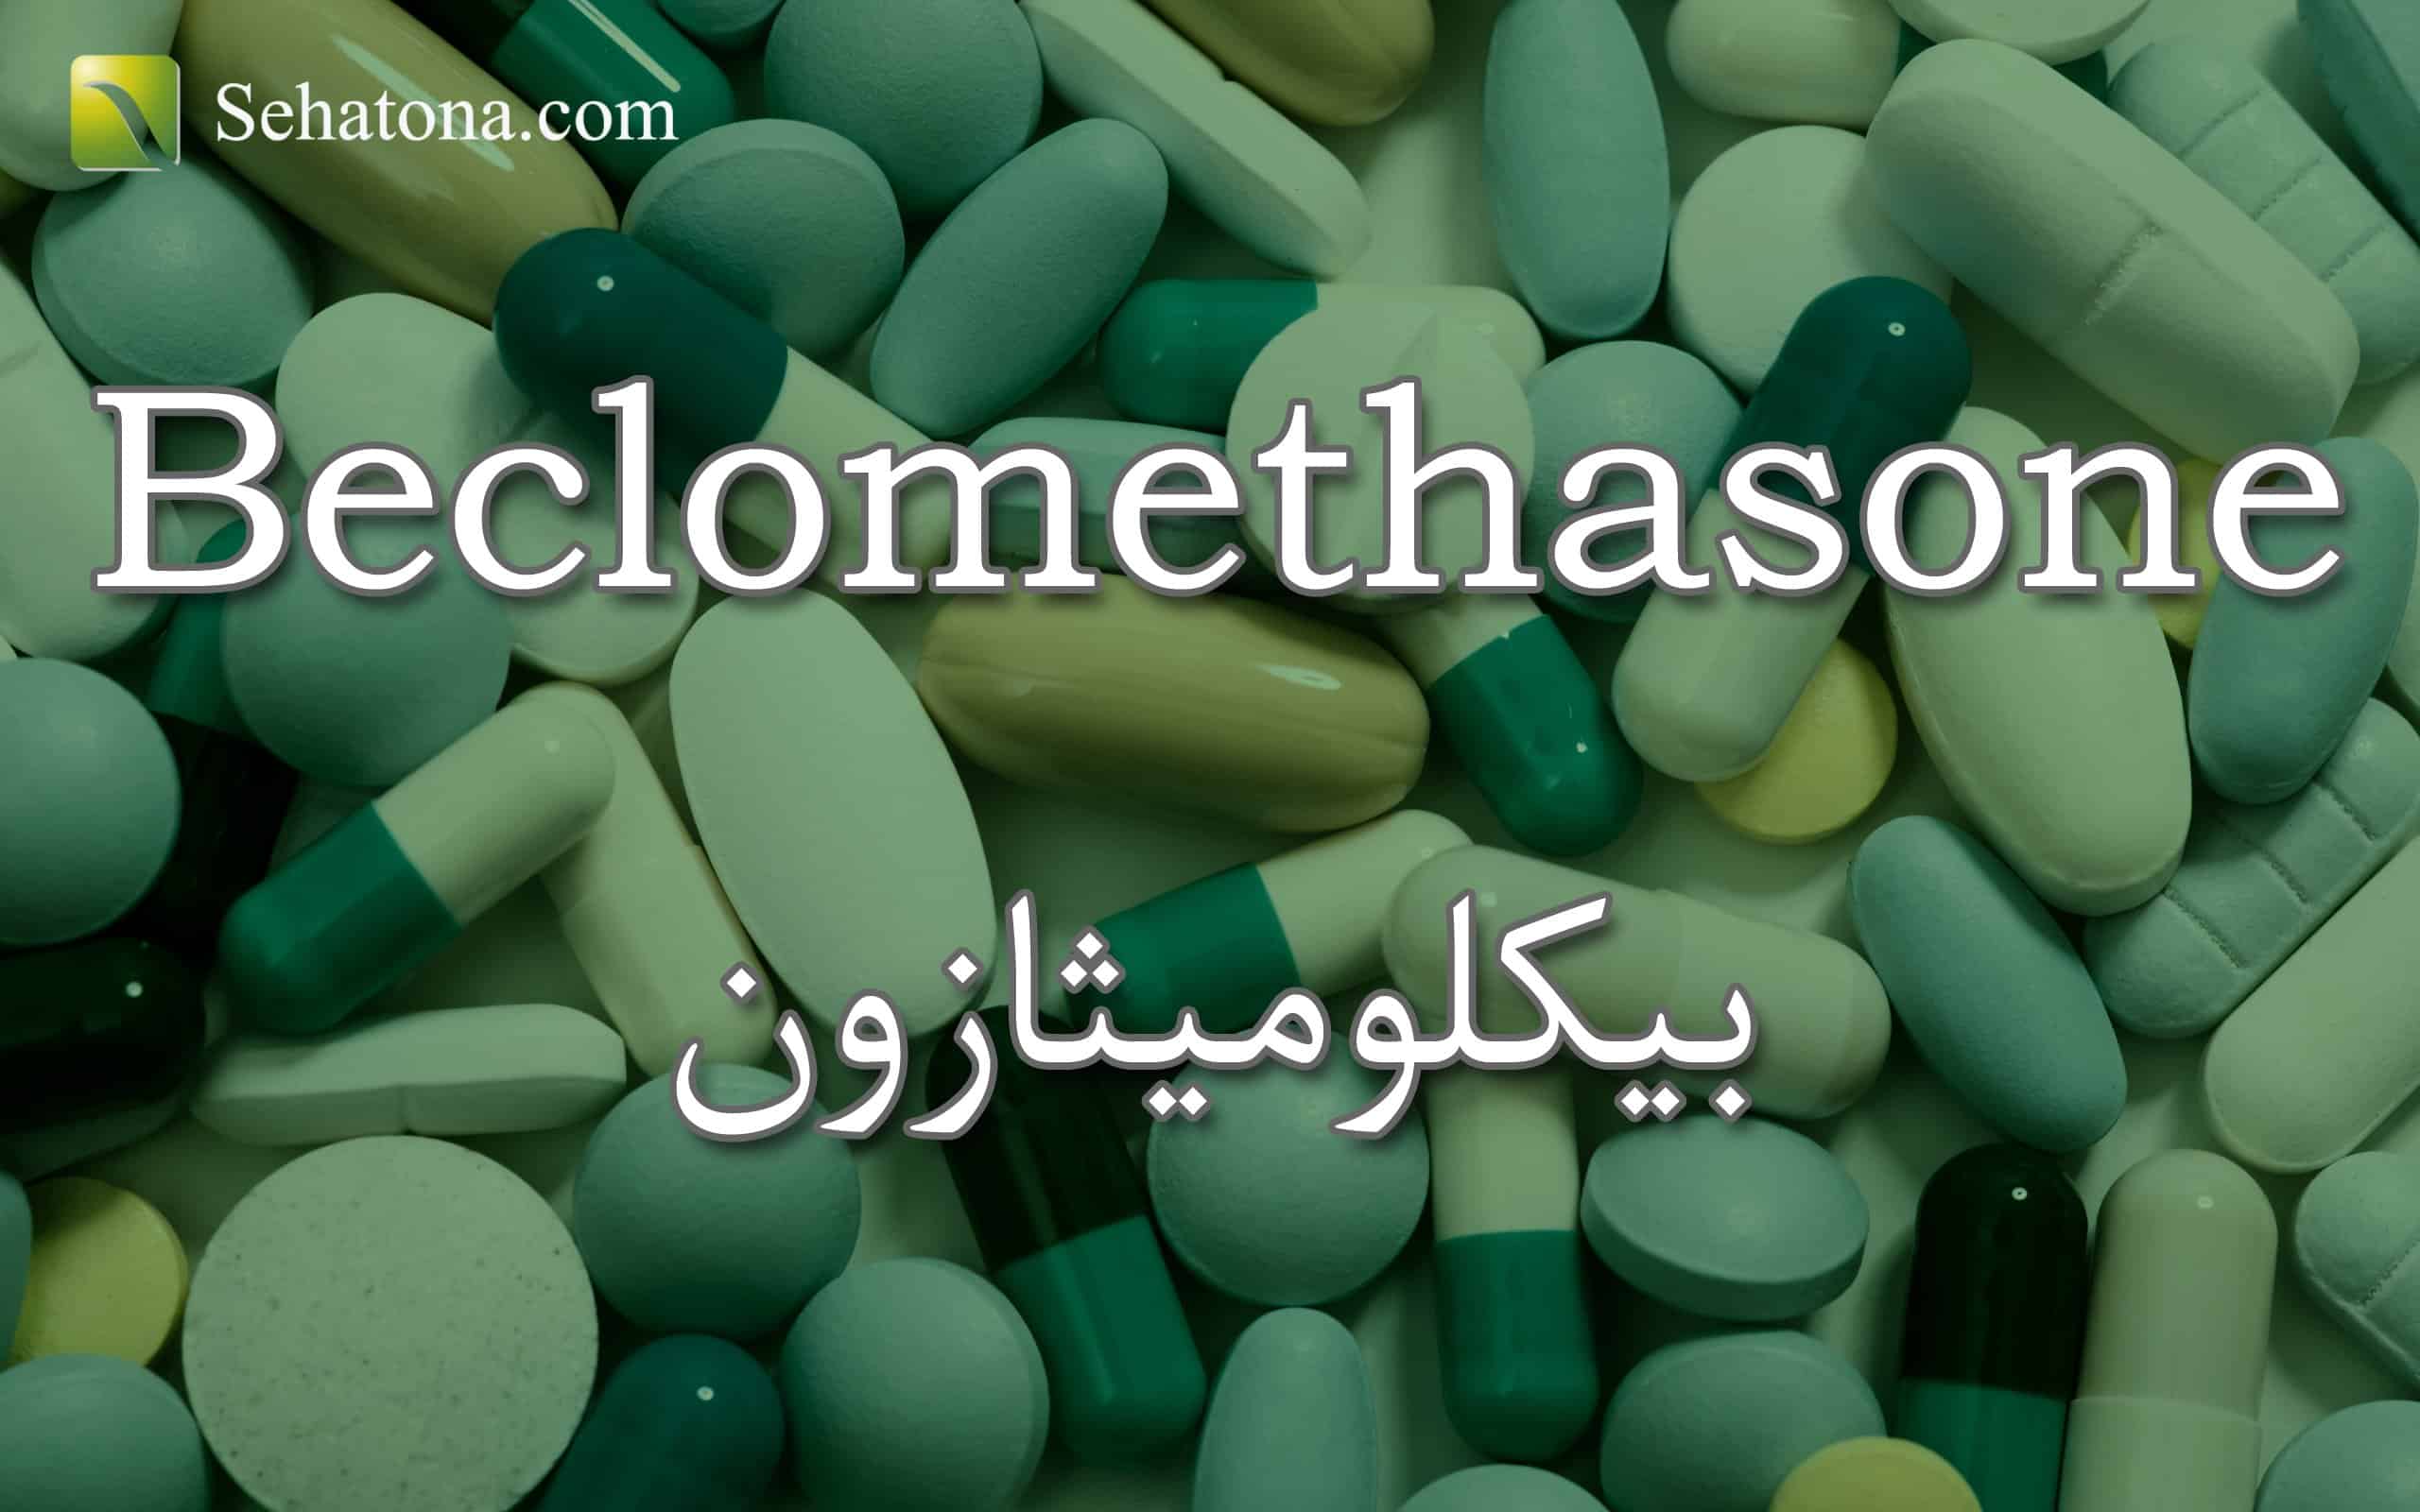 Beclomethasone